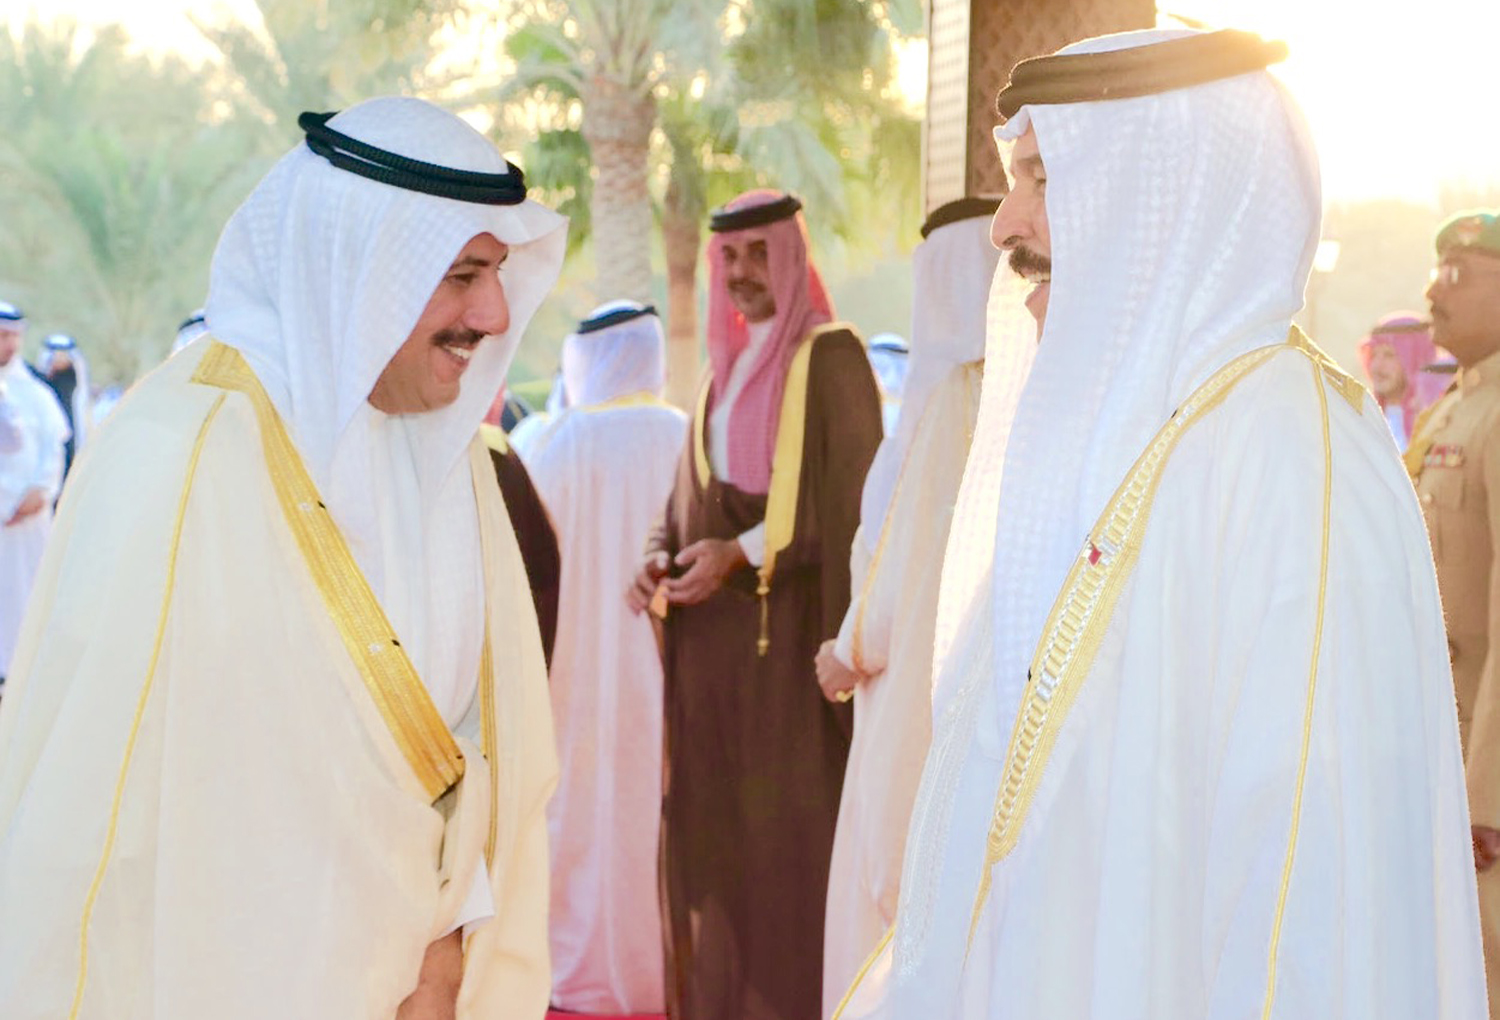 Kuwait's ambassador to Bahrain Sheikh Azzam Al-Sabah Congratulates the Bahraini monarch Hamad bin Eissa Al Khalifa on the advent of the Eid Al-Adha